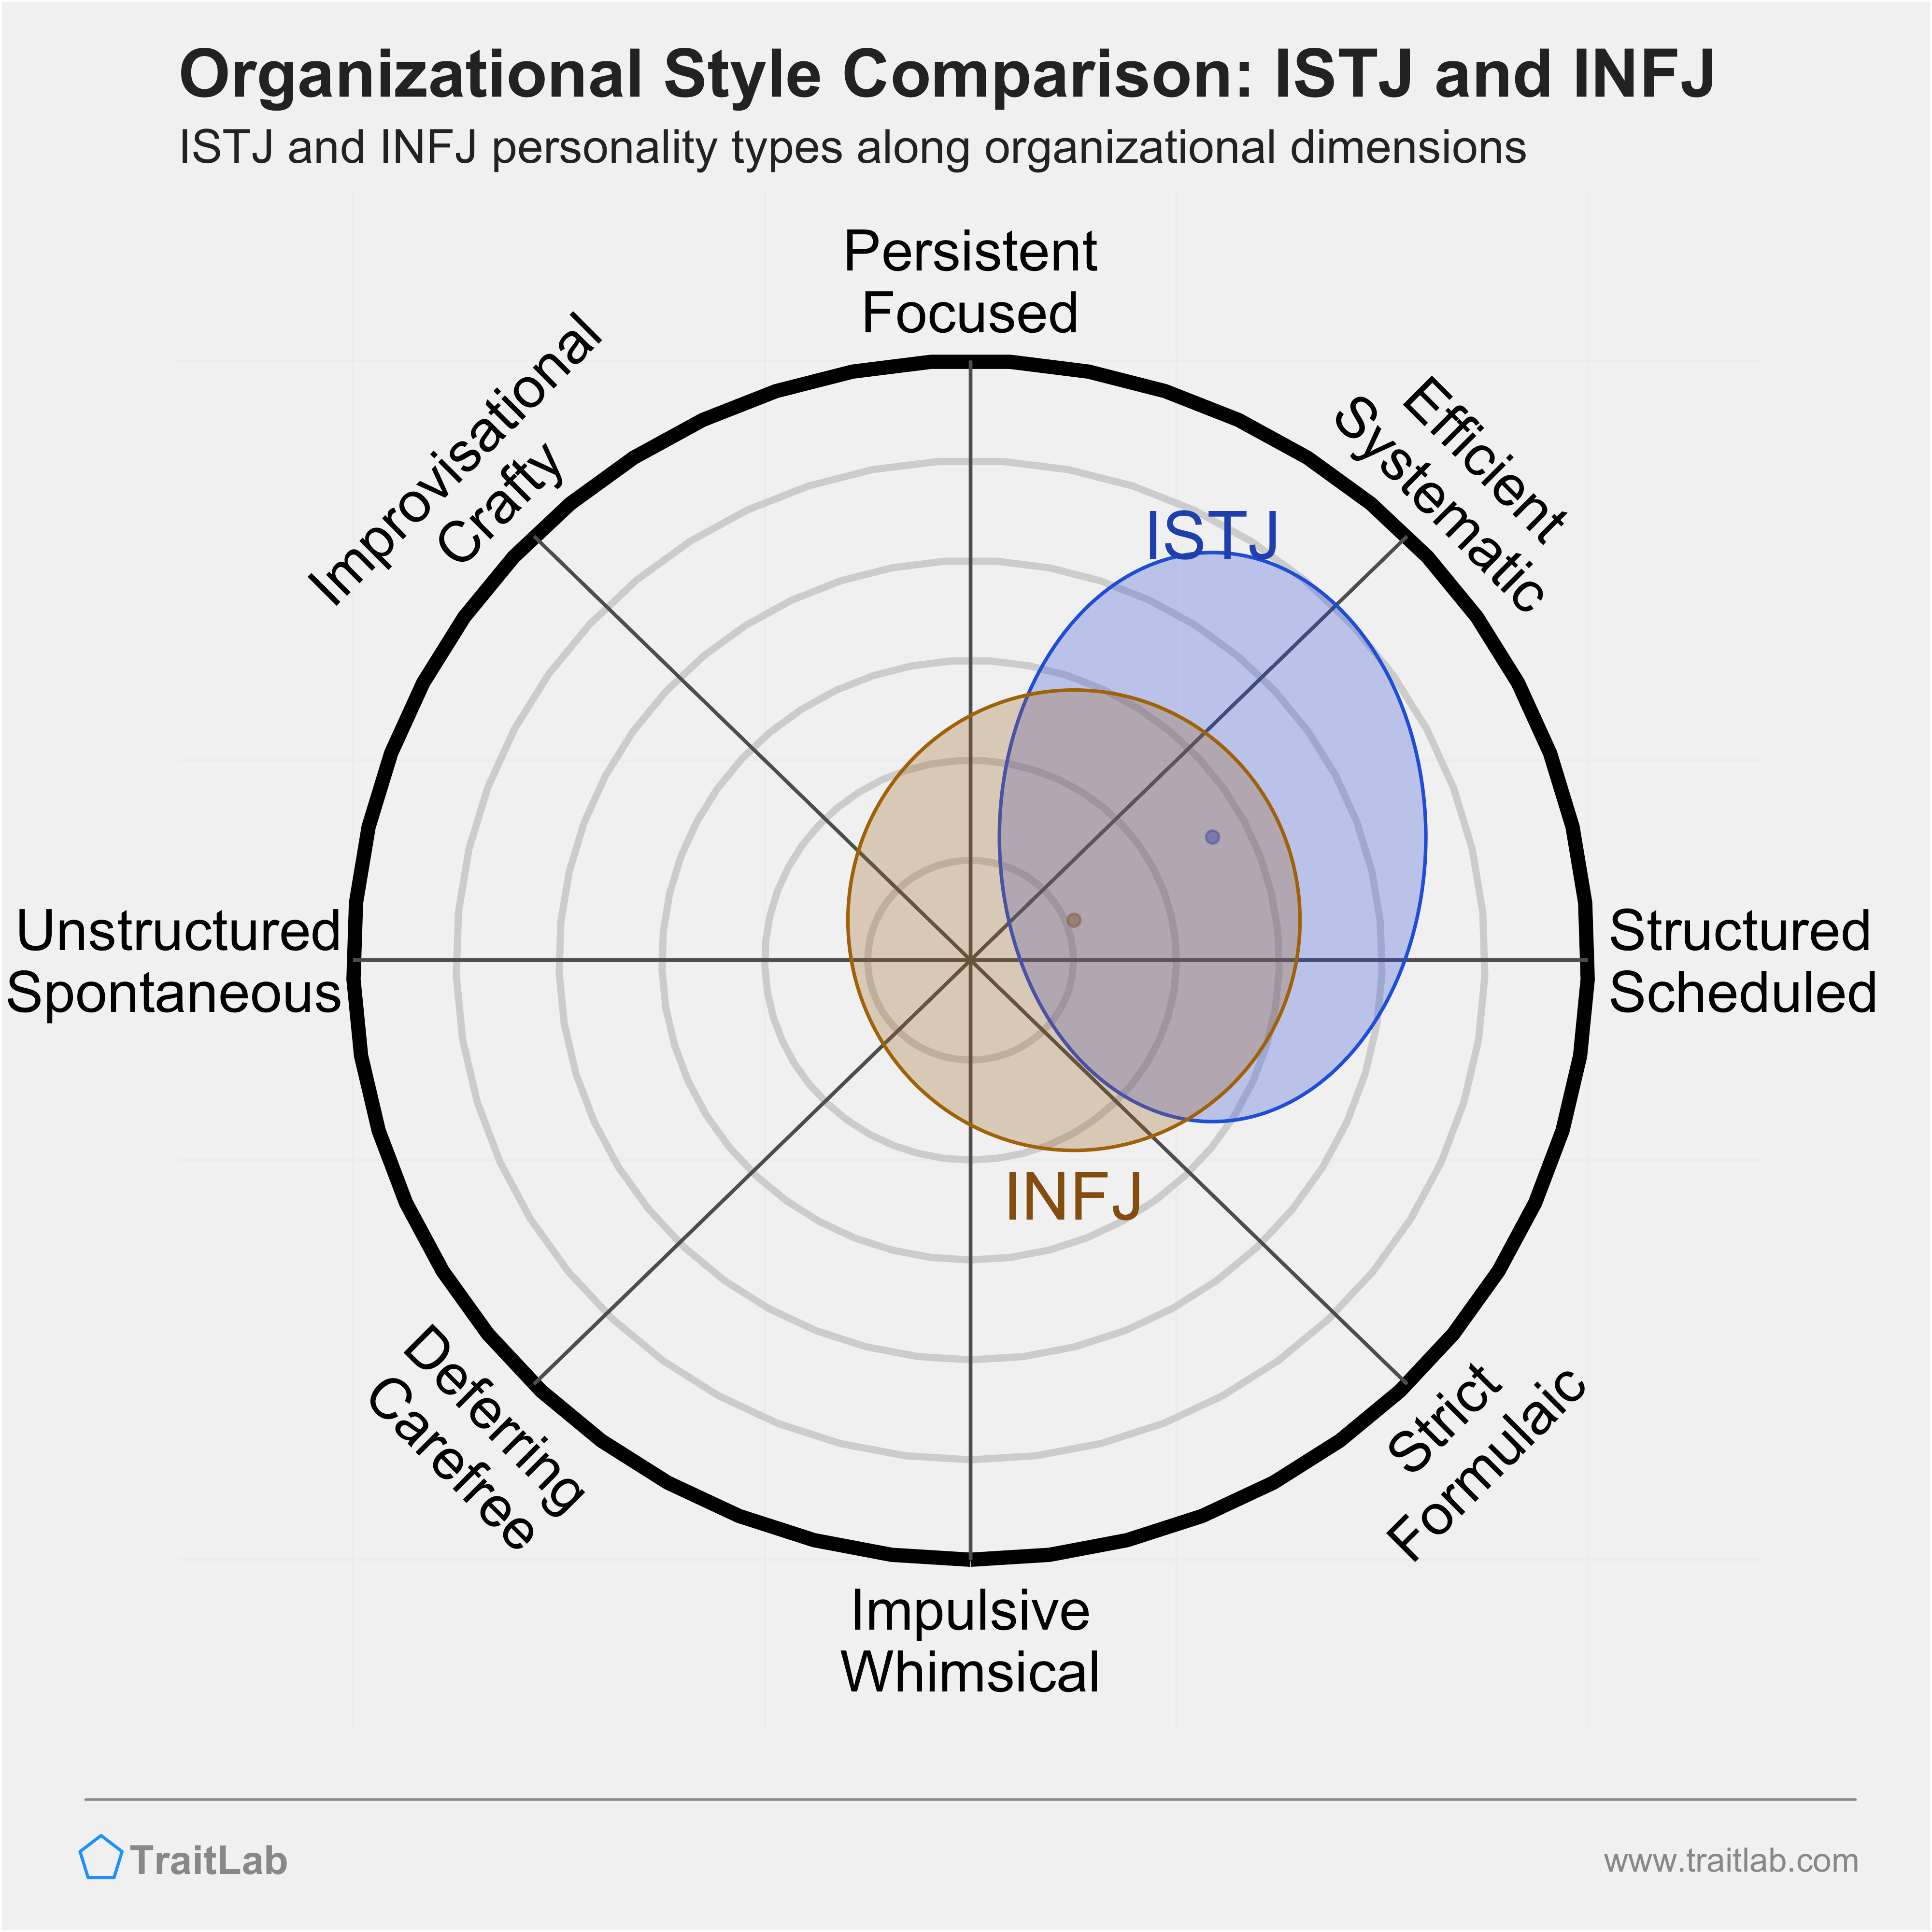 ISTJ and INFJ comparison across organizational dimensions